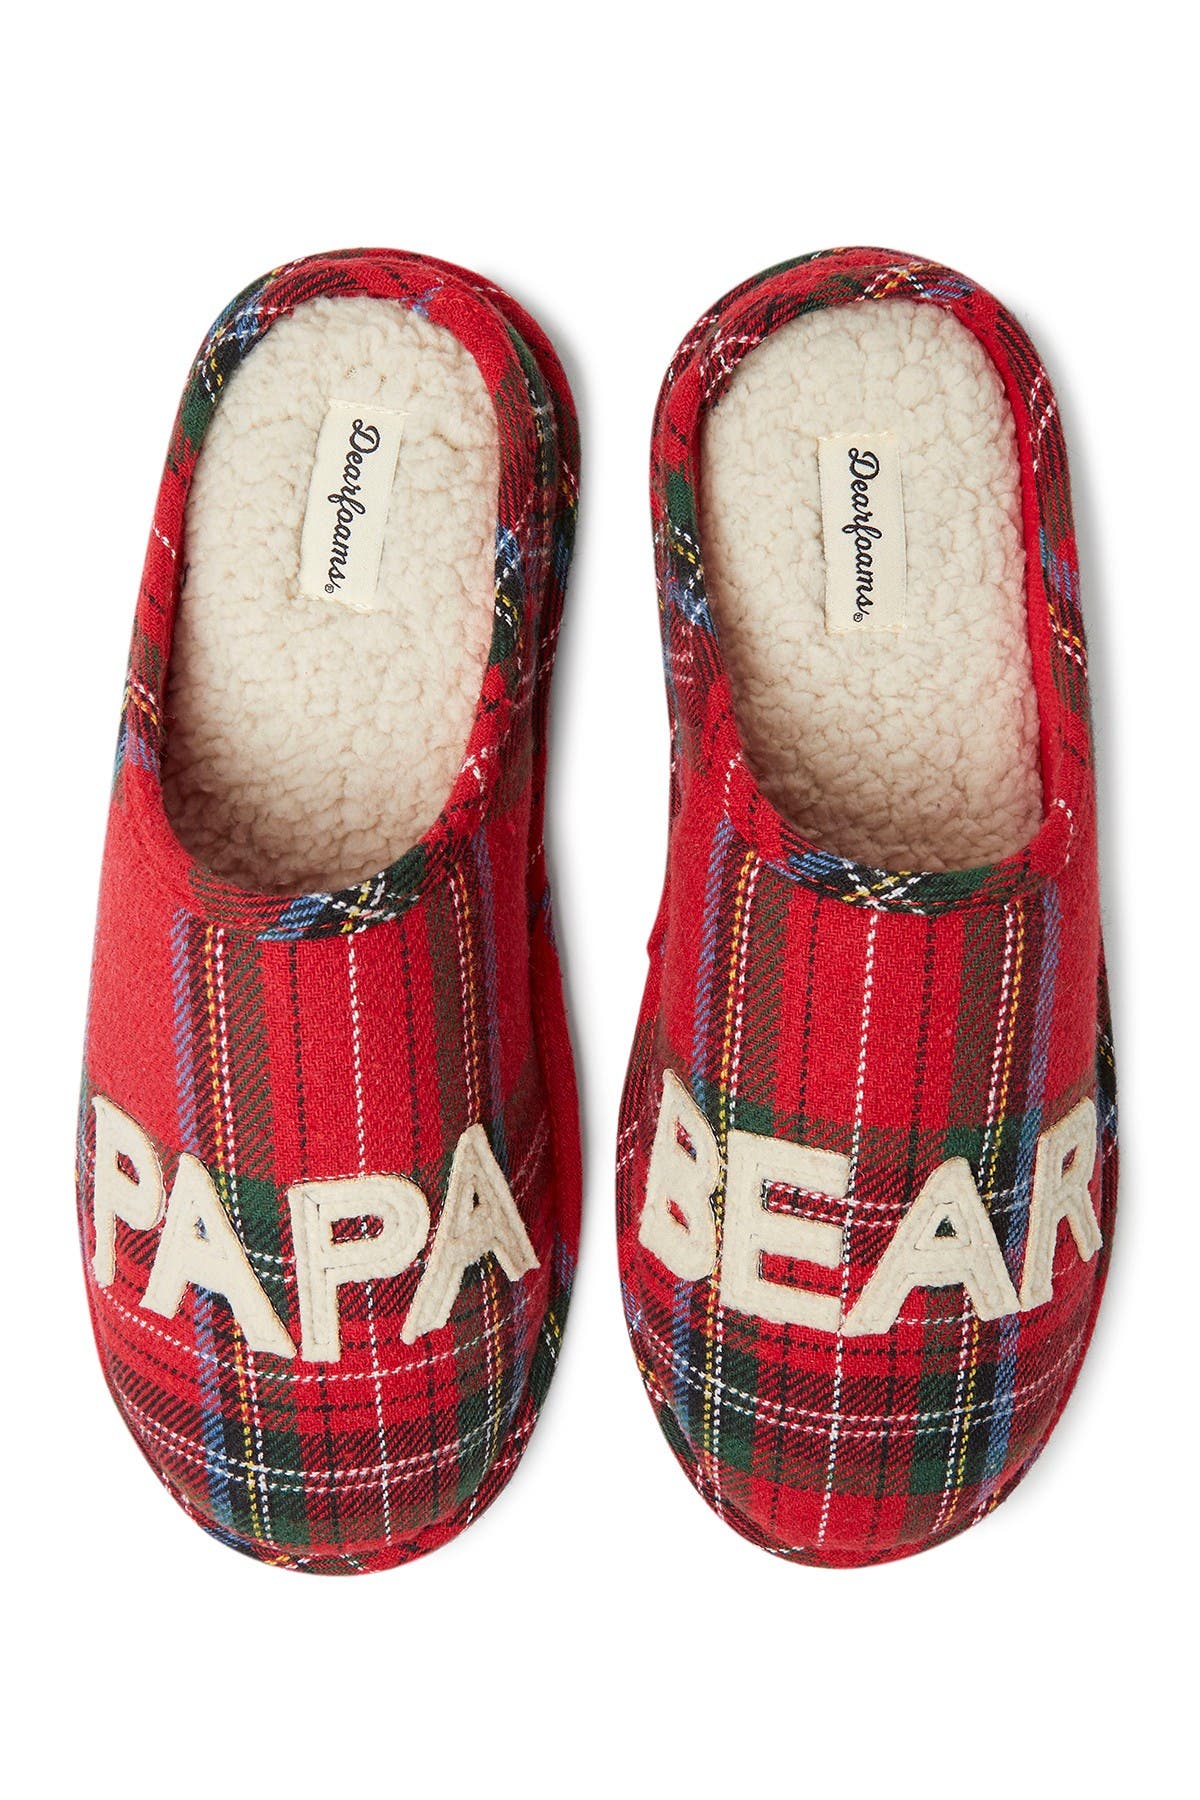 kohls papa bear slippers